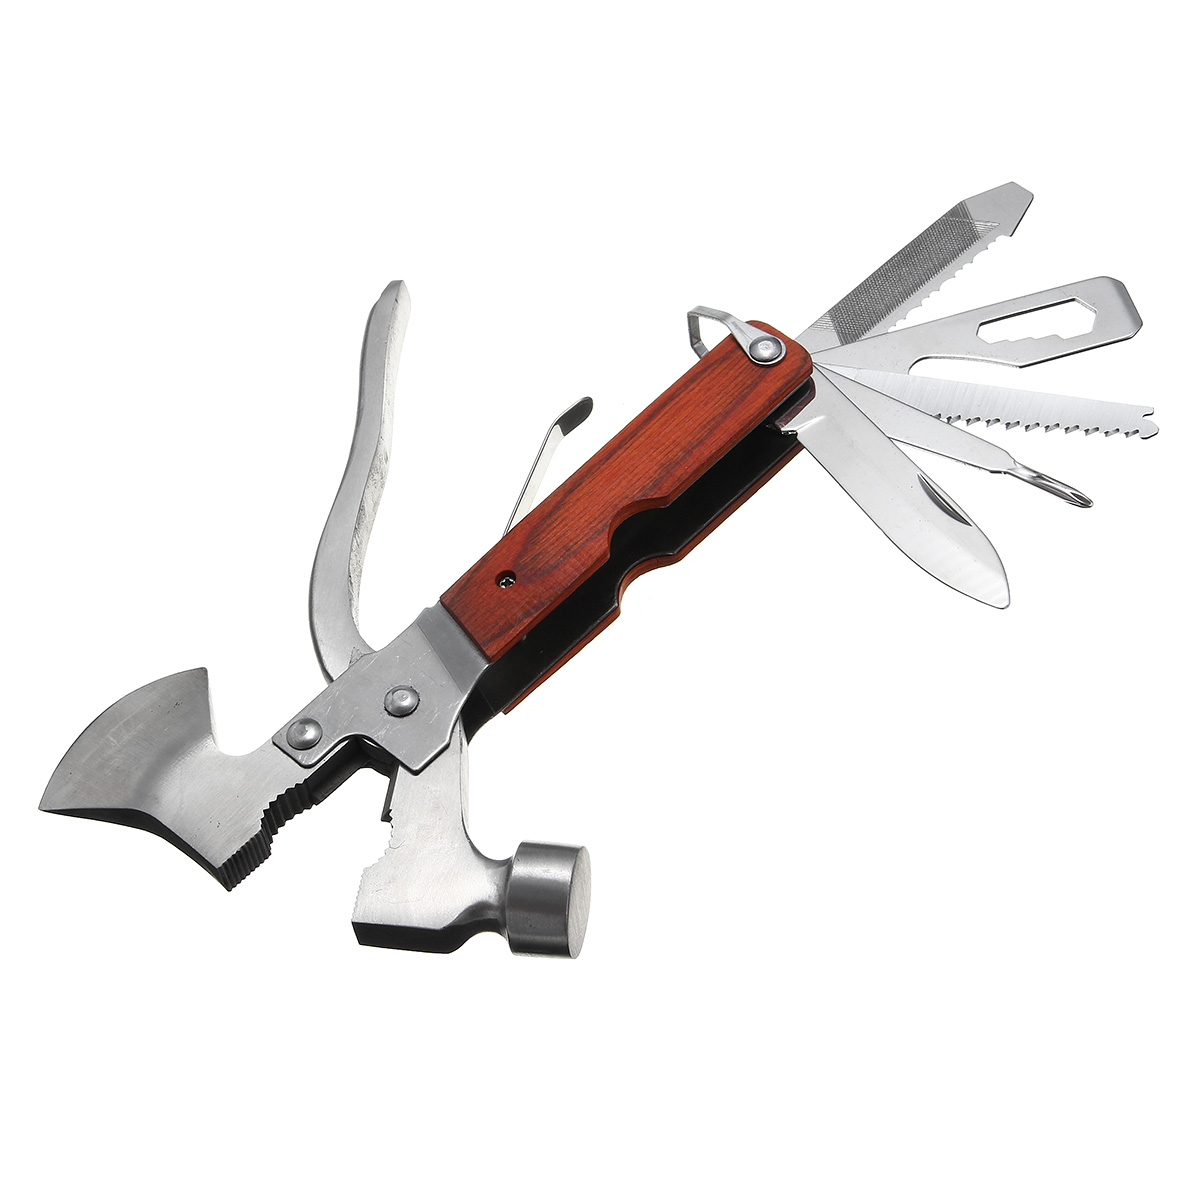 Multifunction-Hammer-Axe-Opener-Screwdriver-Pliers-Tool-Kit-Emergency-Survival-Hatchet-EDC-Tools-1306709-5